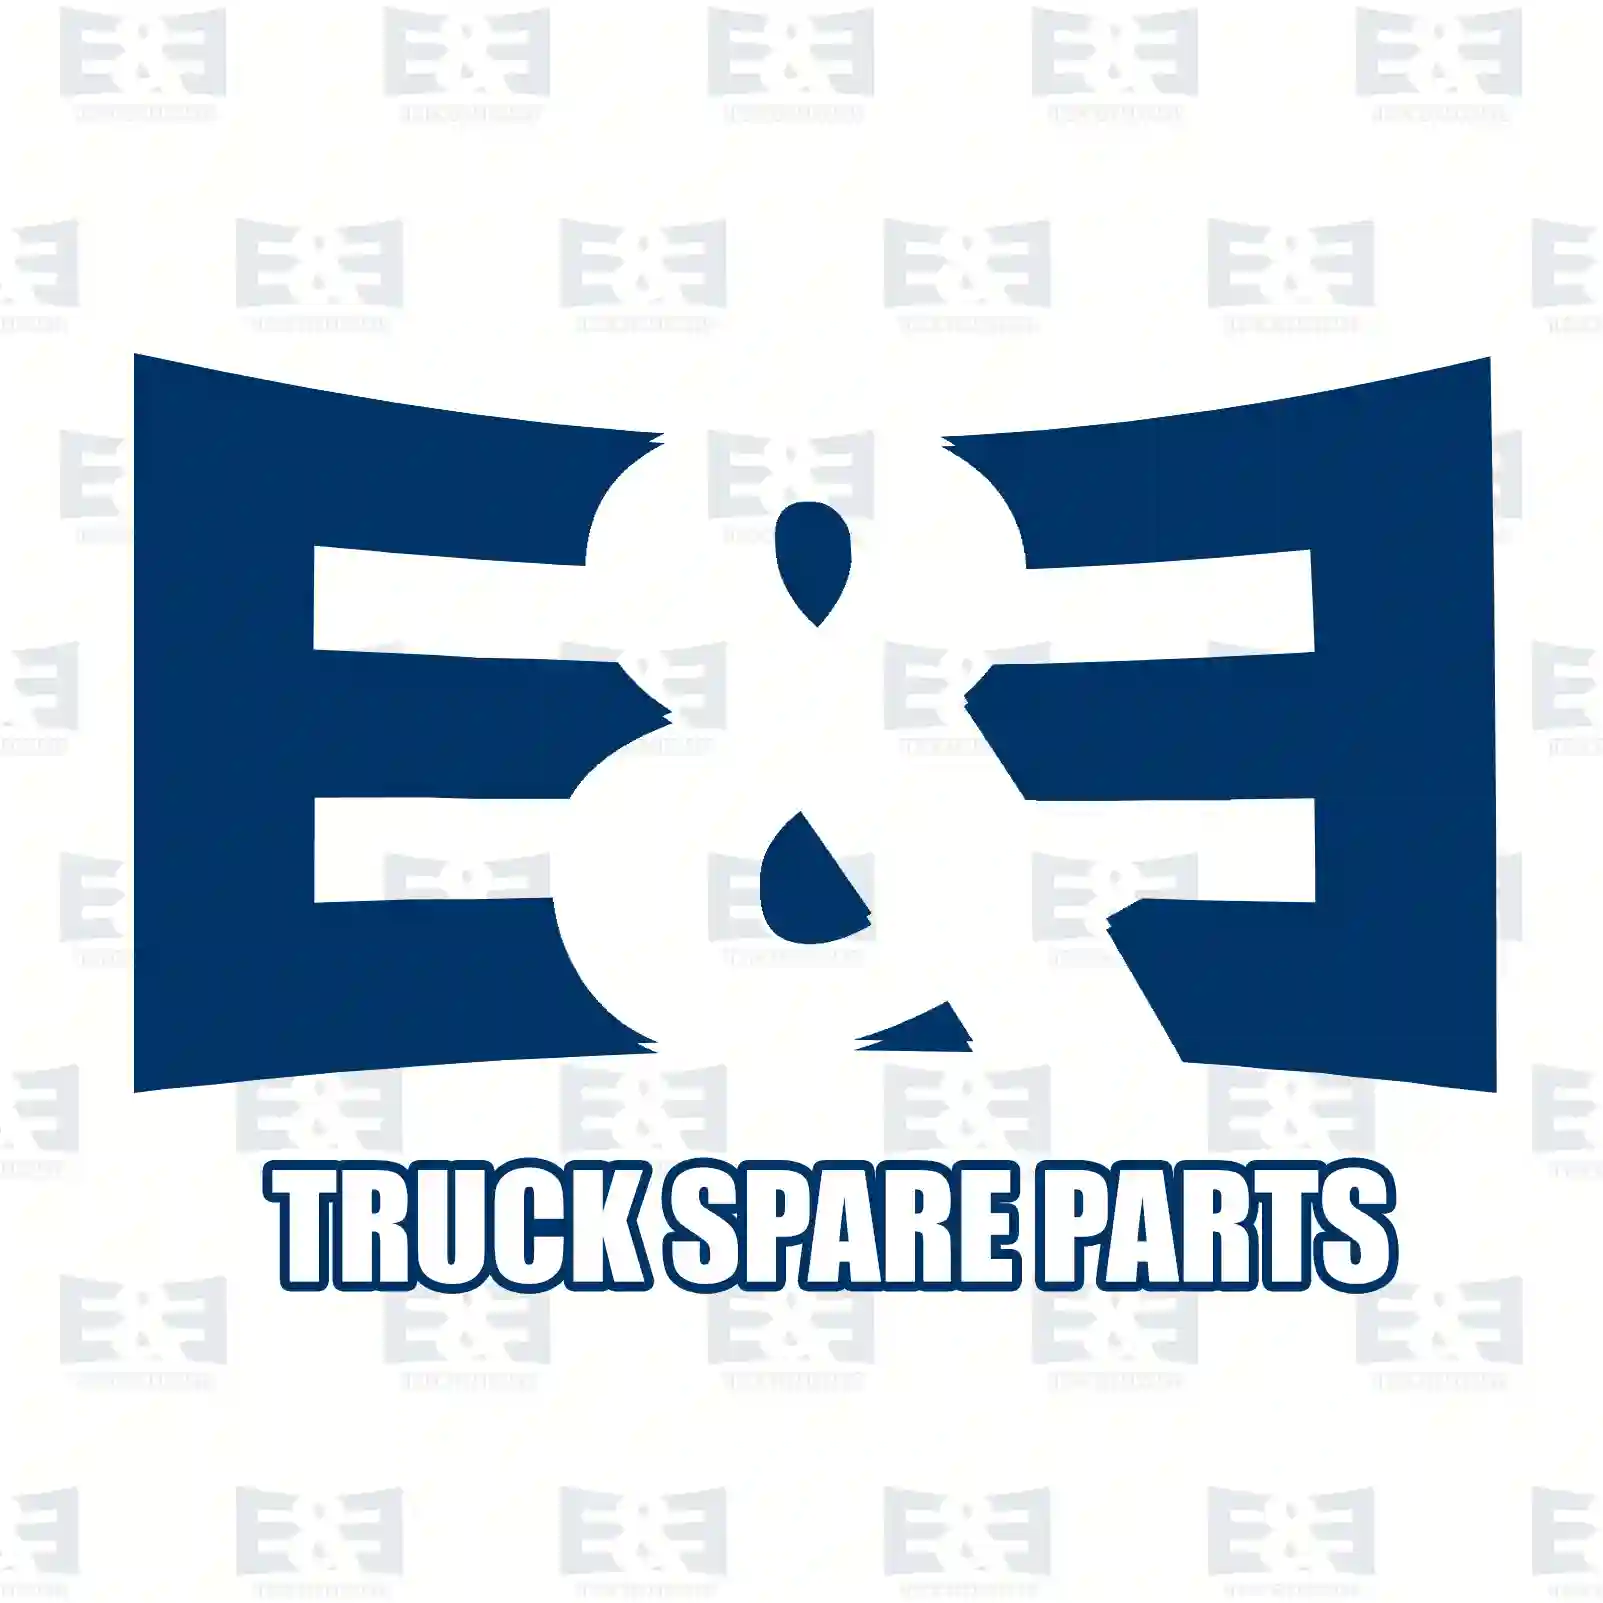 Mounting kit, 2E2293673, SP8563, 270526 ||  2E2293673 E&E Truck Spare Parts | Truck Spare Parts, Auotomotive Spare Parts Mounting kit, 2E2293673, SP8563, 270526 ||  2E2293673 E&E Truck Spare Parts | Truck Spare Parts, Auotomotive Spare Parts